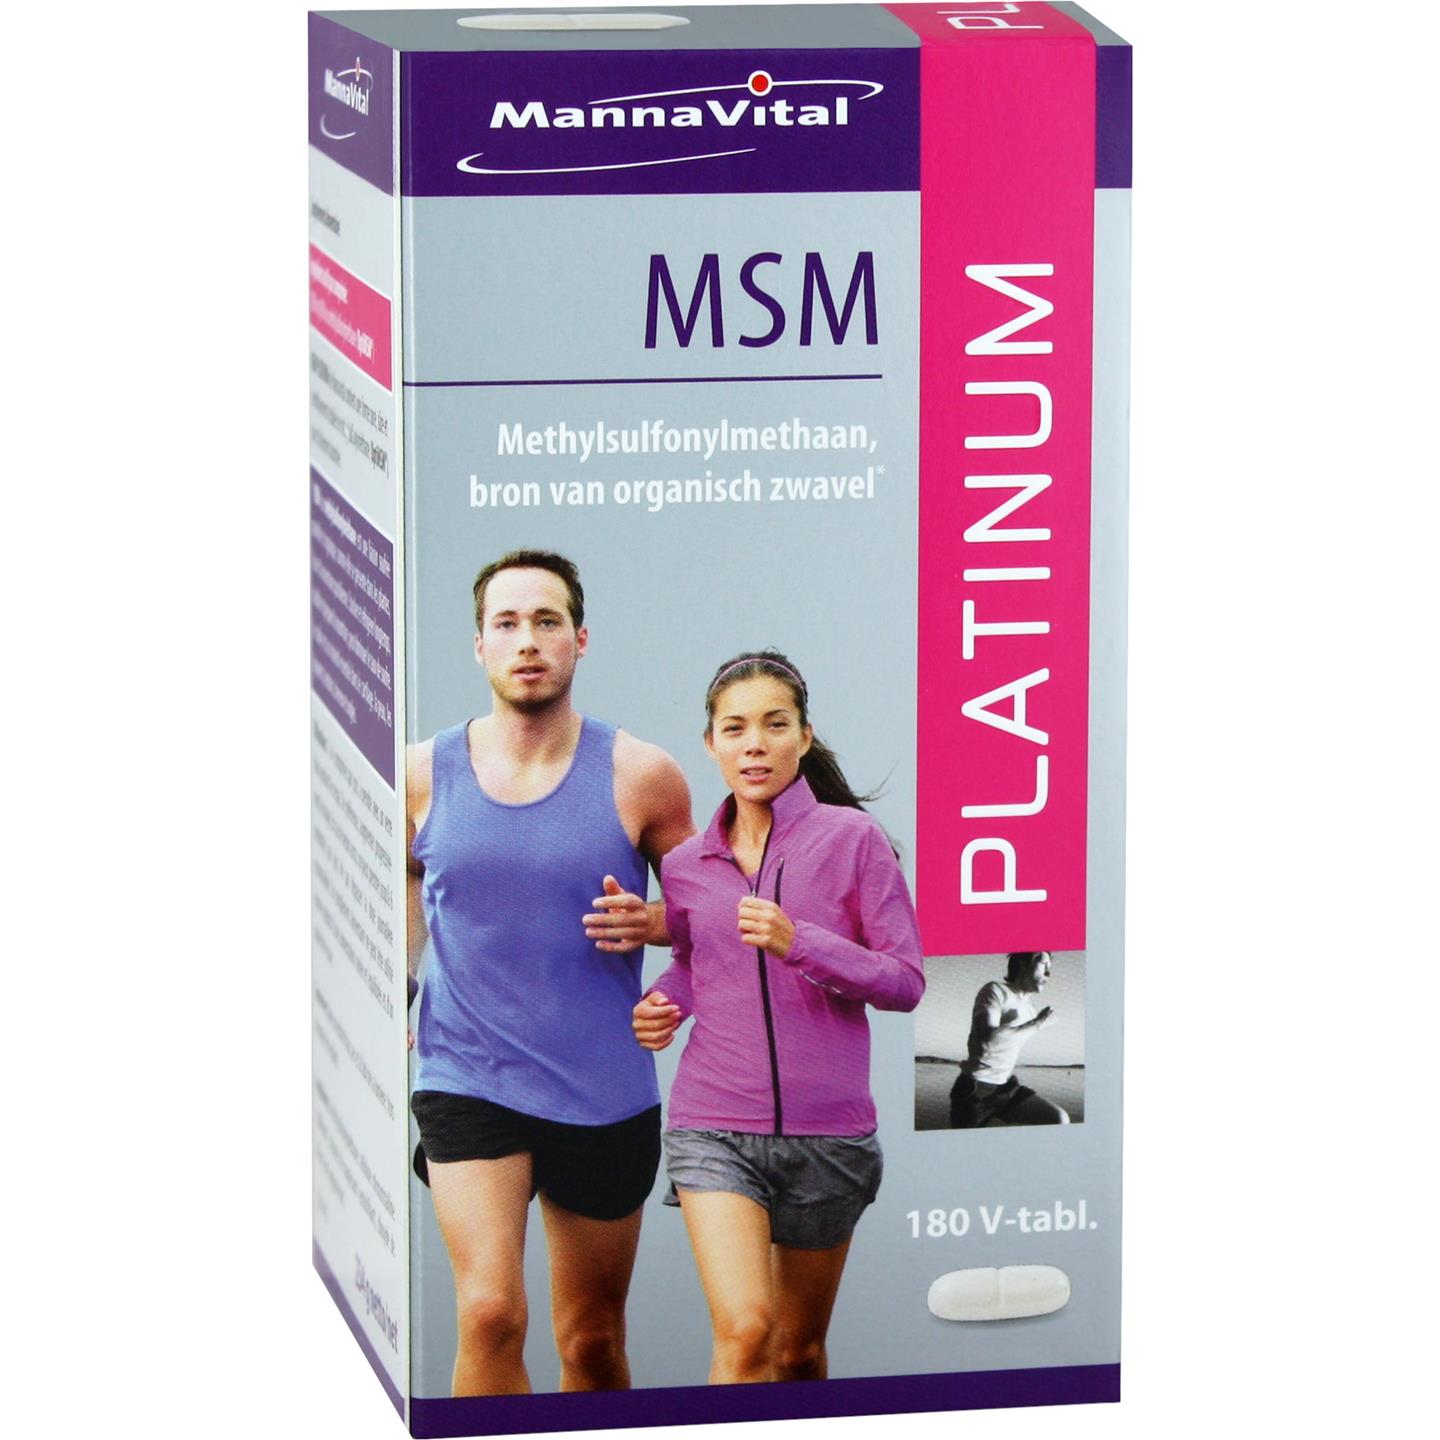 Mannavital MSM platinum